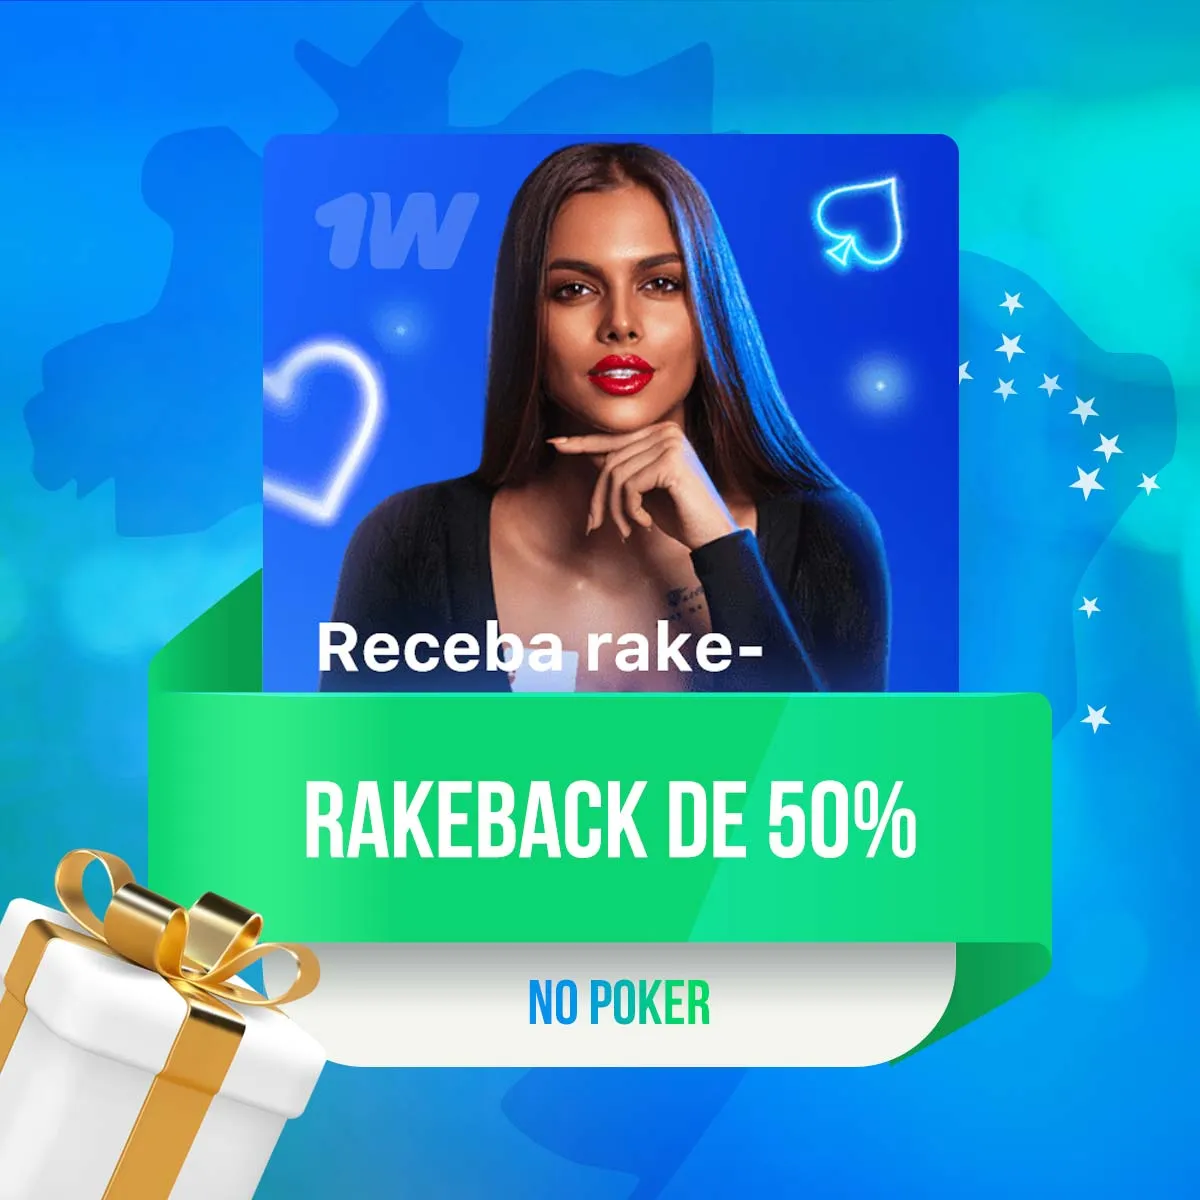 Rakeback de 50% no poker no aplicativo de apostas 1win no Brasil